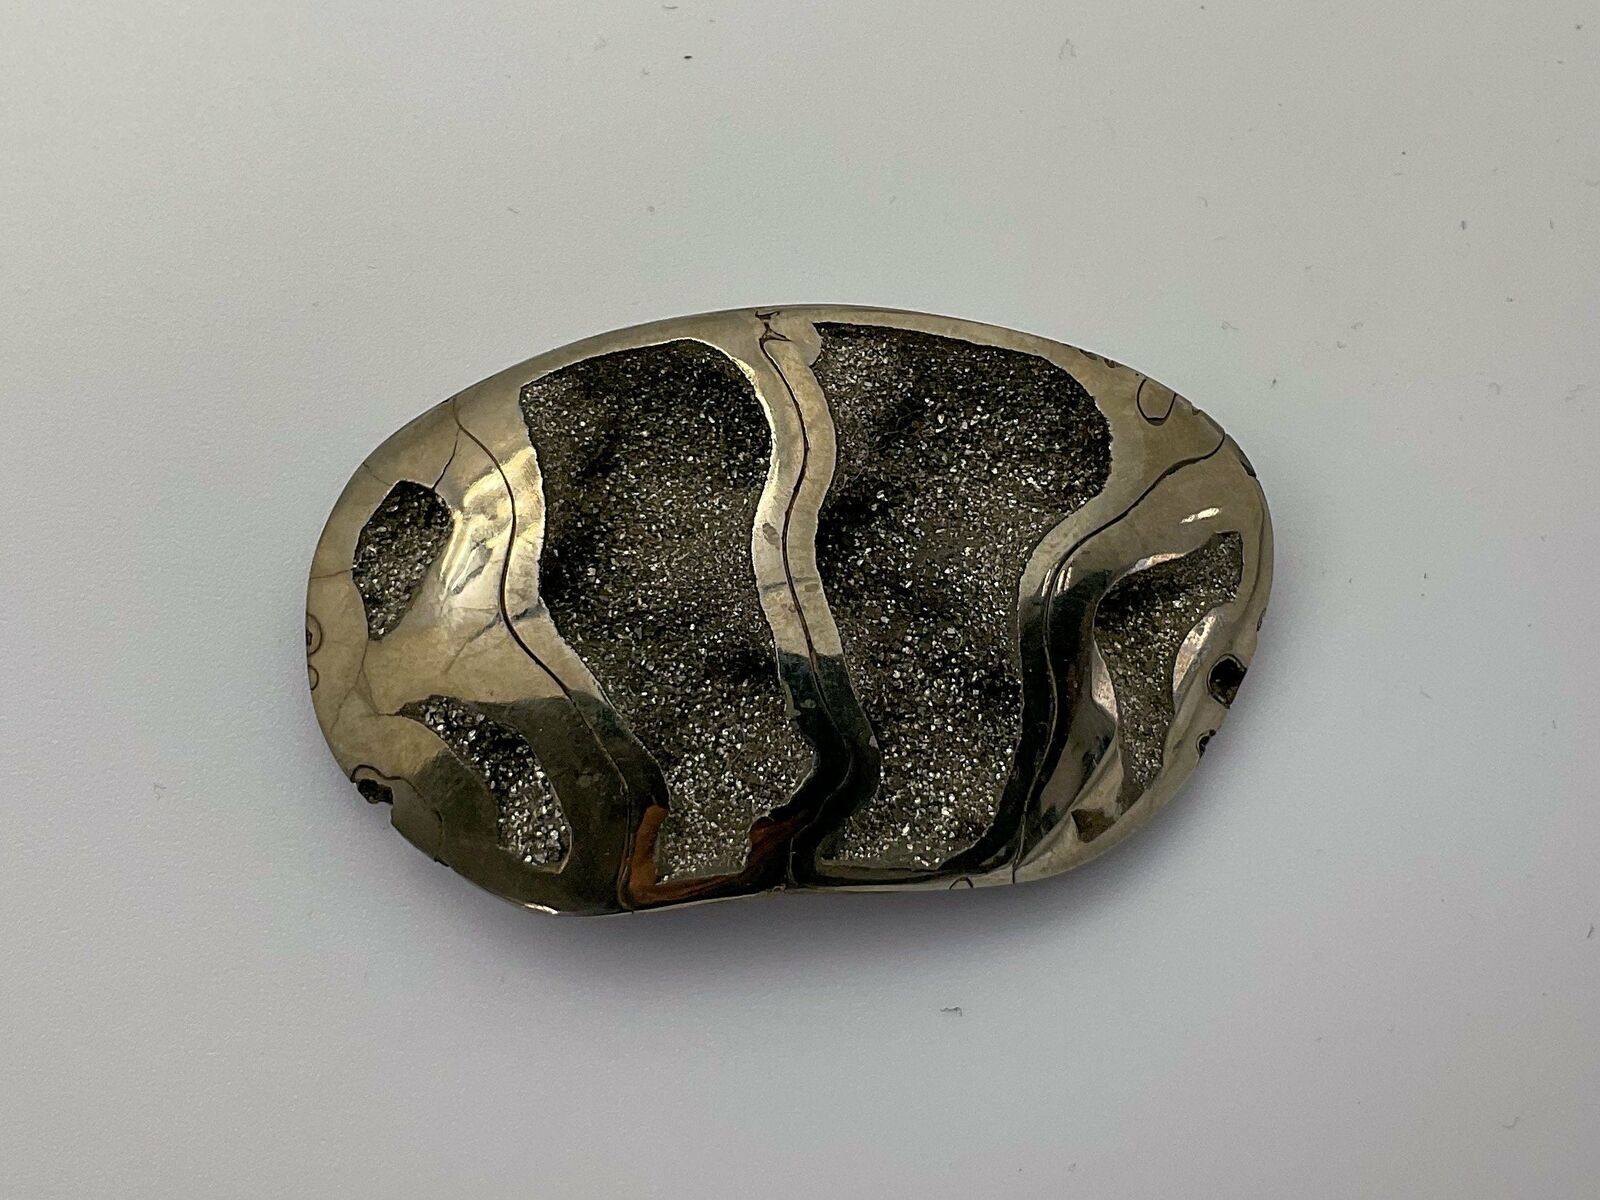 Amazing pyritized ammonite specimen